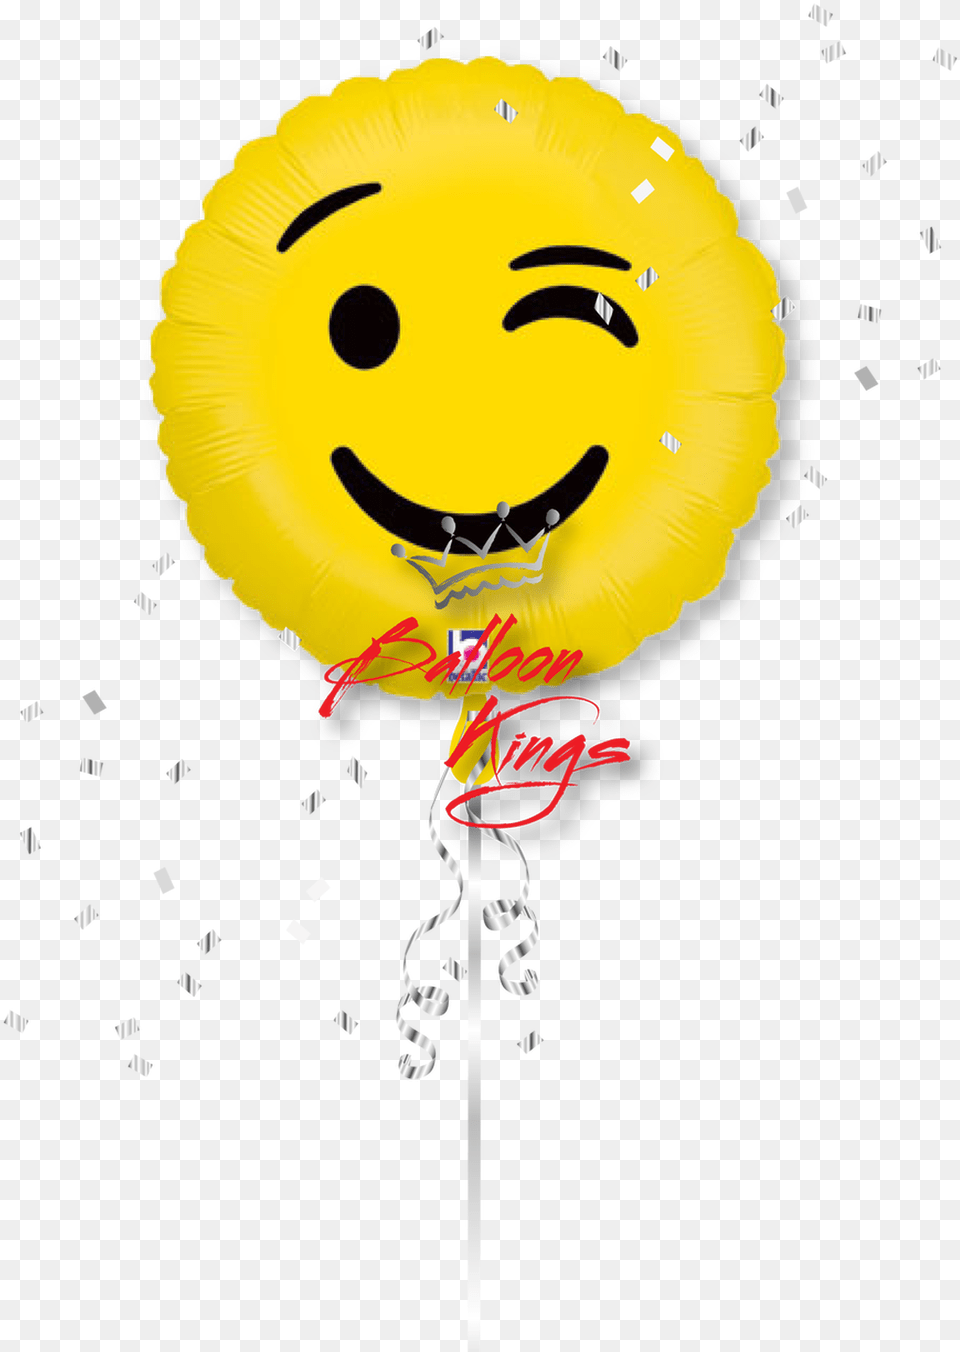 Emoji Wink Smiley Face Balloon Transparent Png Image